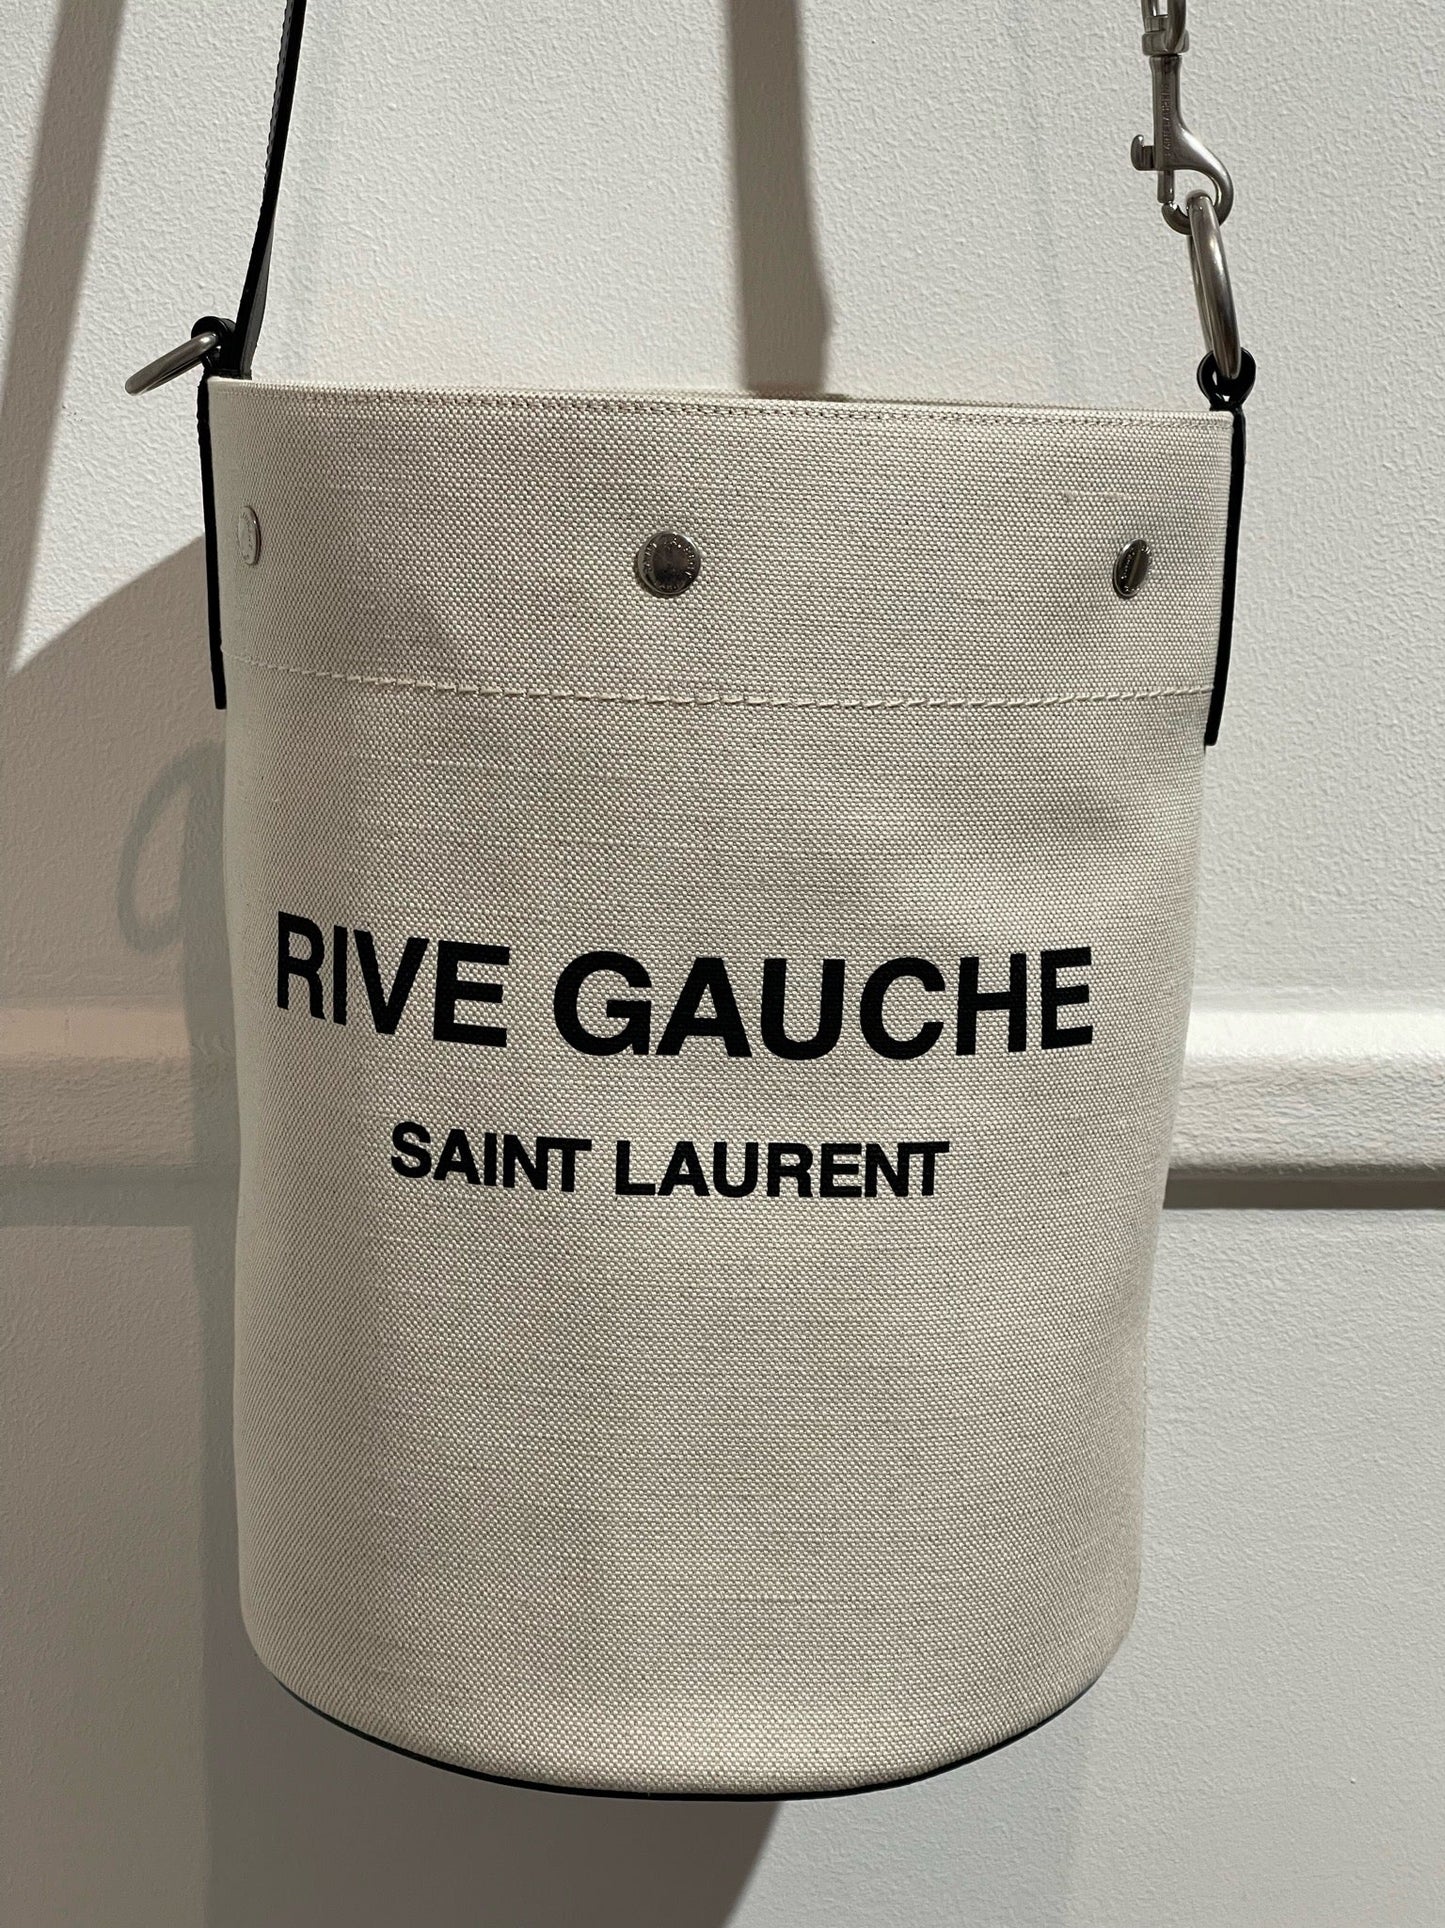 Sac Saint Laurent Seau Rive Gauche NEUF